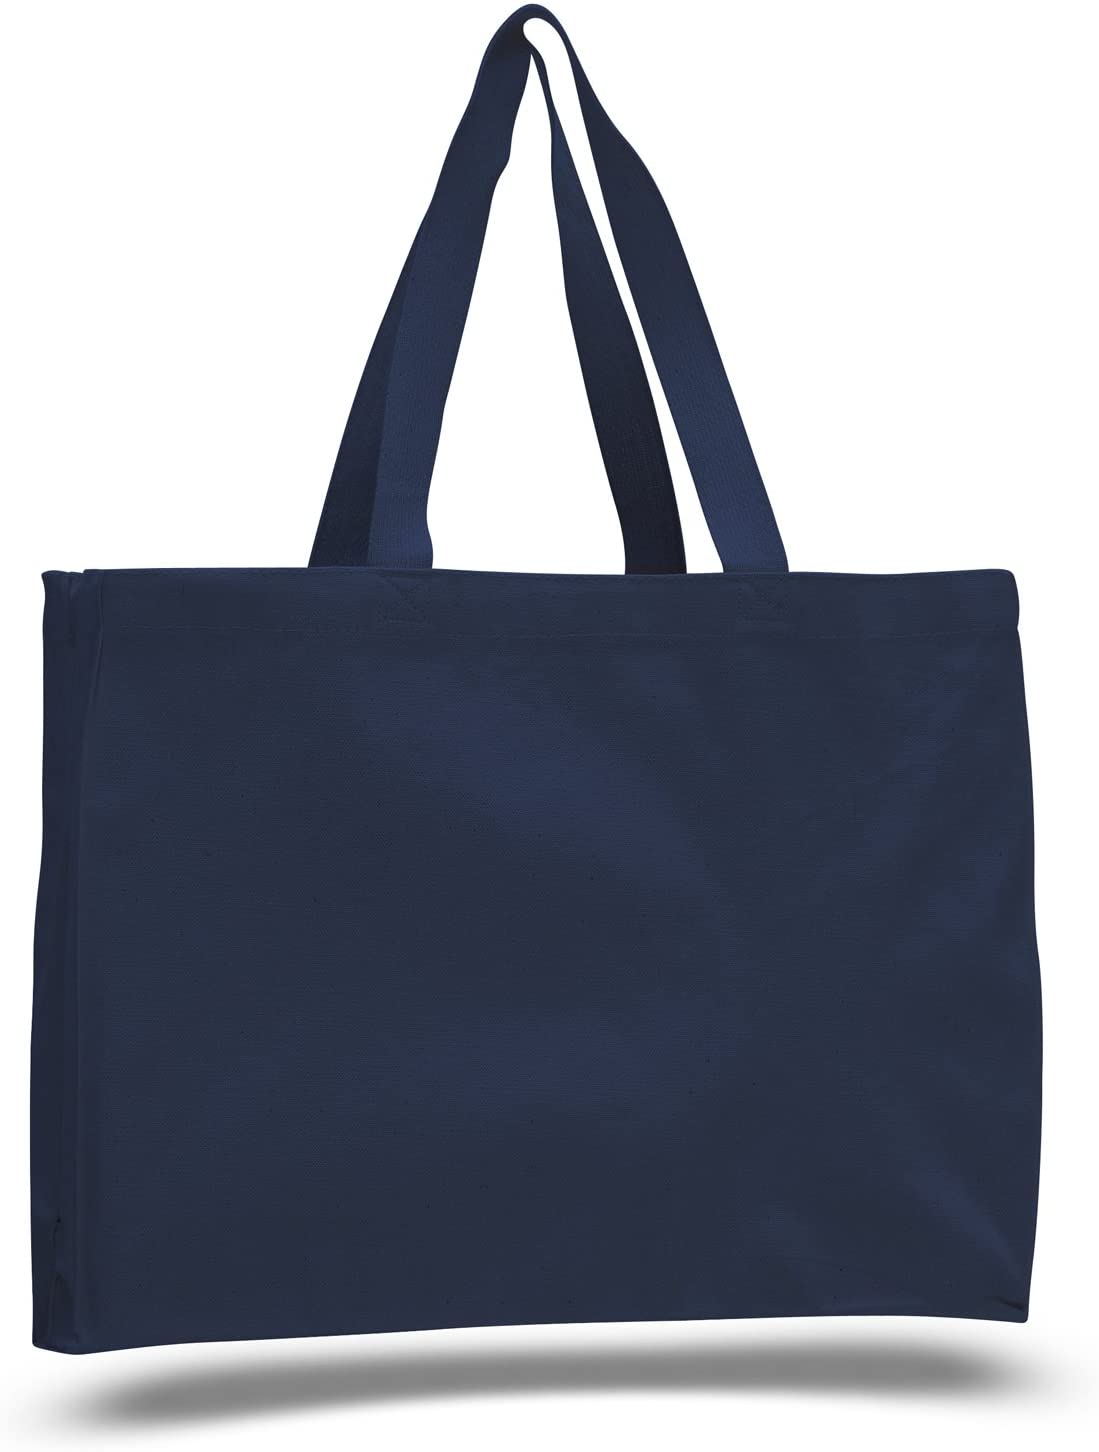 Bulk Heavy Canvas Shopping Tote Bags, Reusable Grocery Shopper Totes Wholesale navy